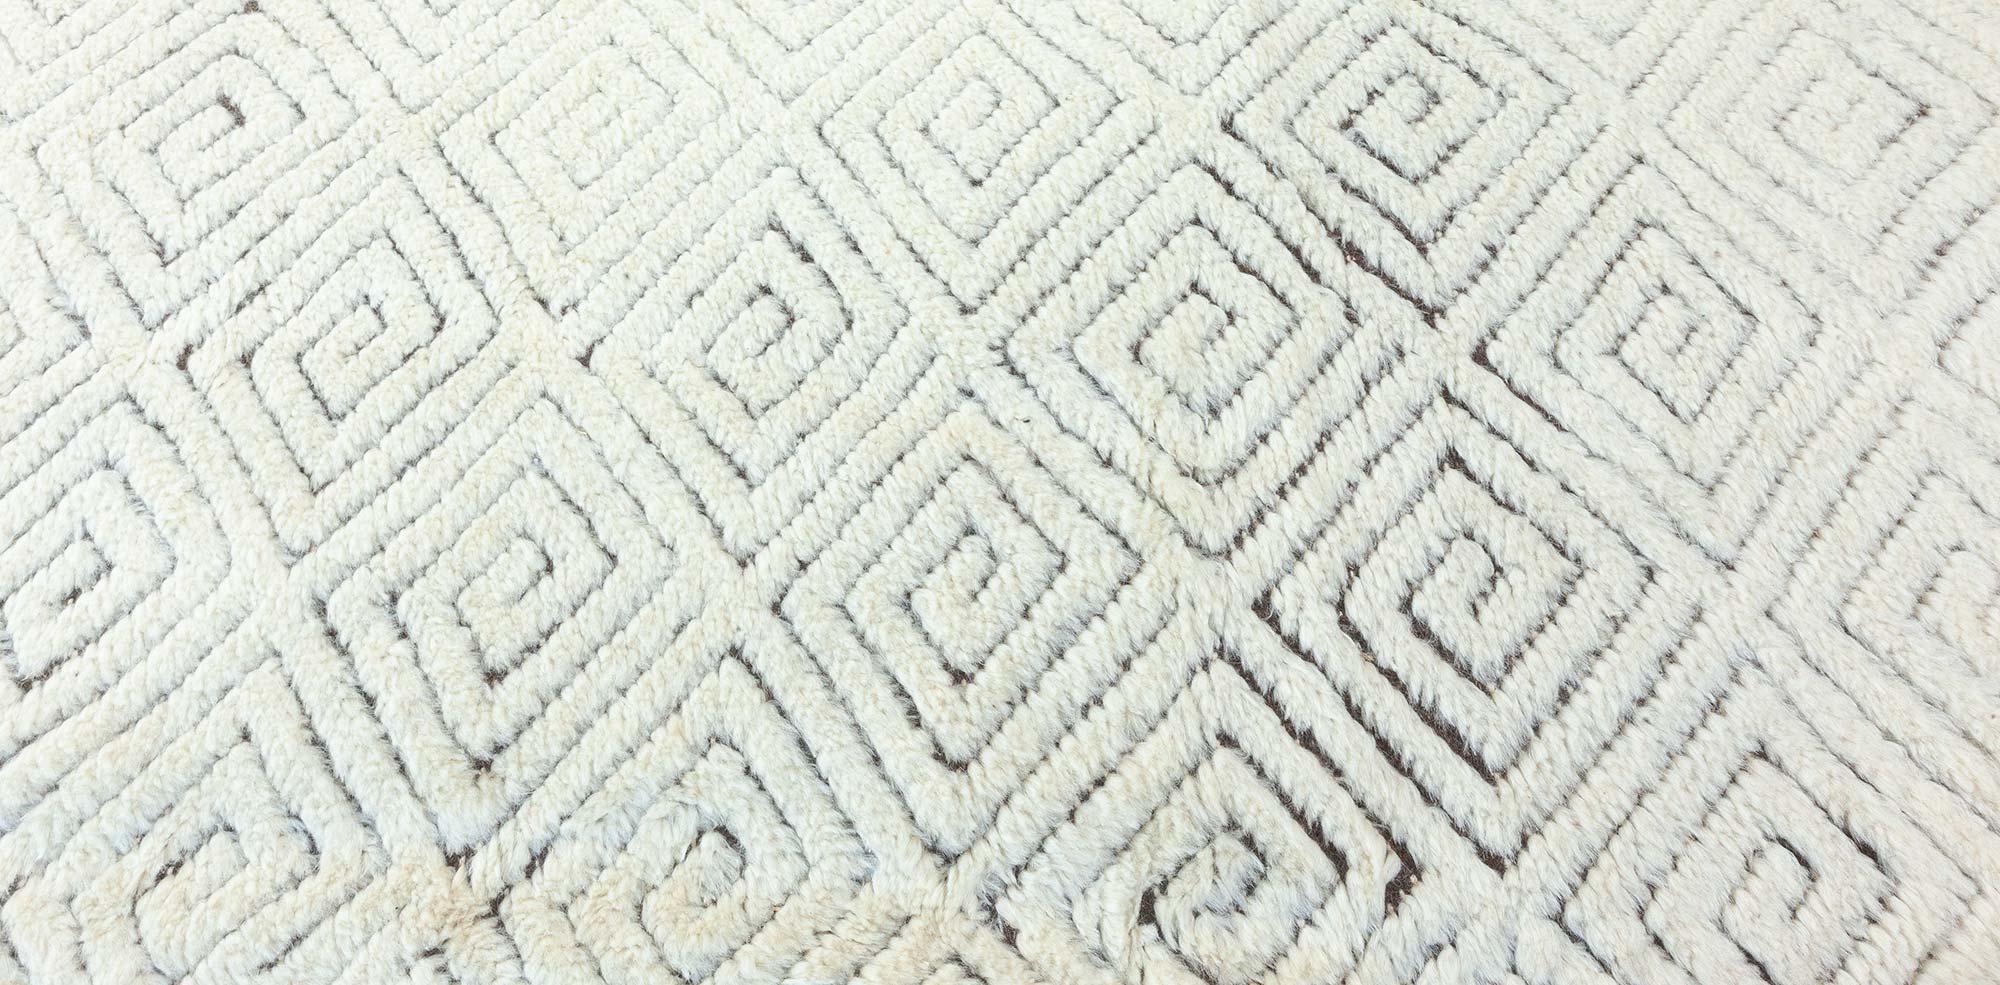 High-quality Extra Large High-Low Lattice Wool Rug by Doris Leslie Blau
Size: 14'2